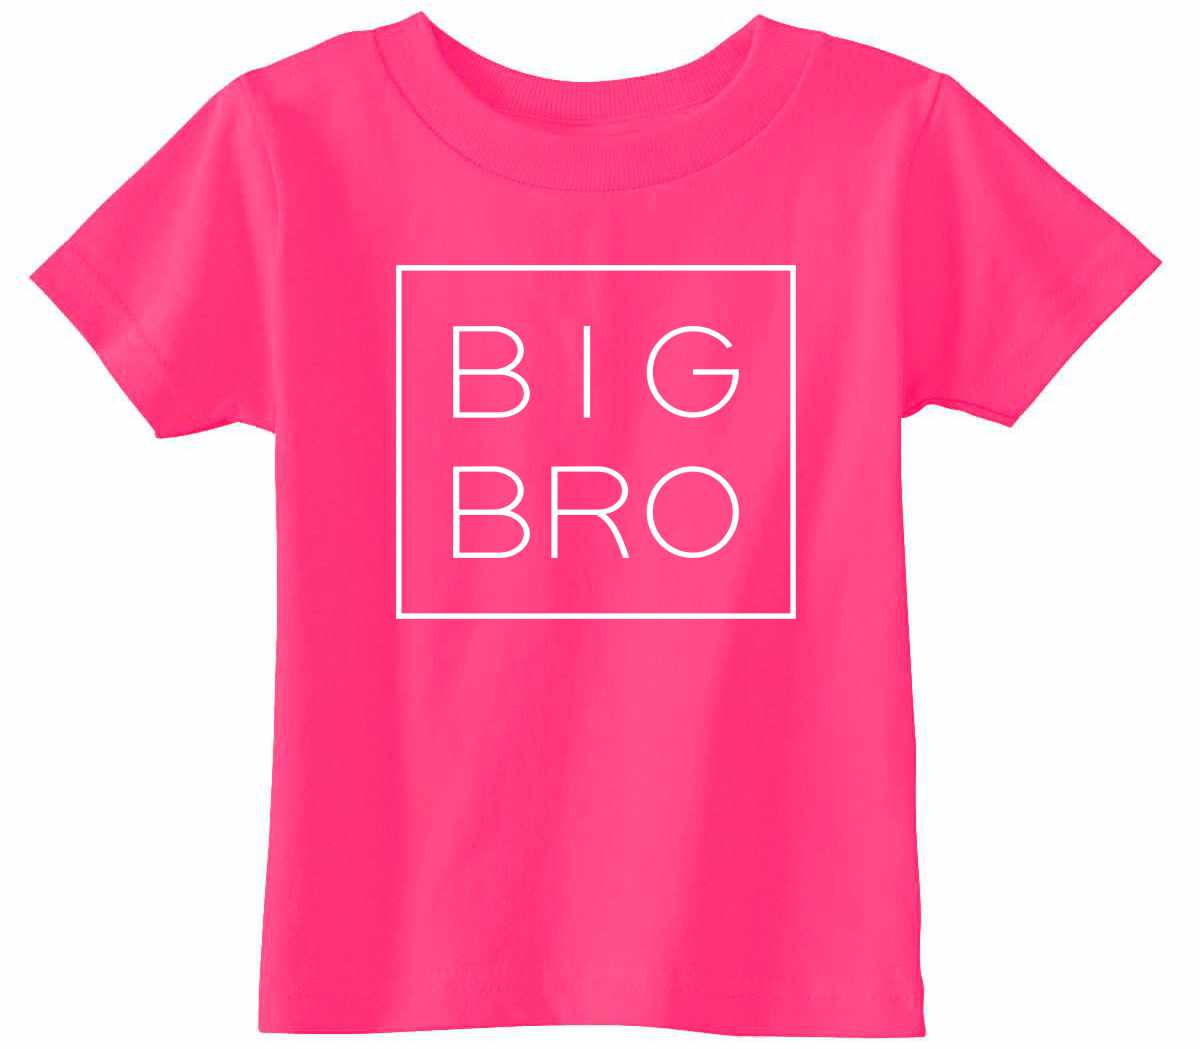 Big Bro - Box on Infant-Toddler T-Shirt (#1249-7)